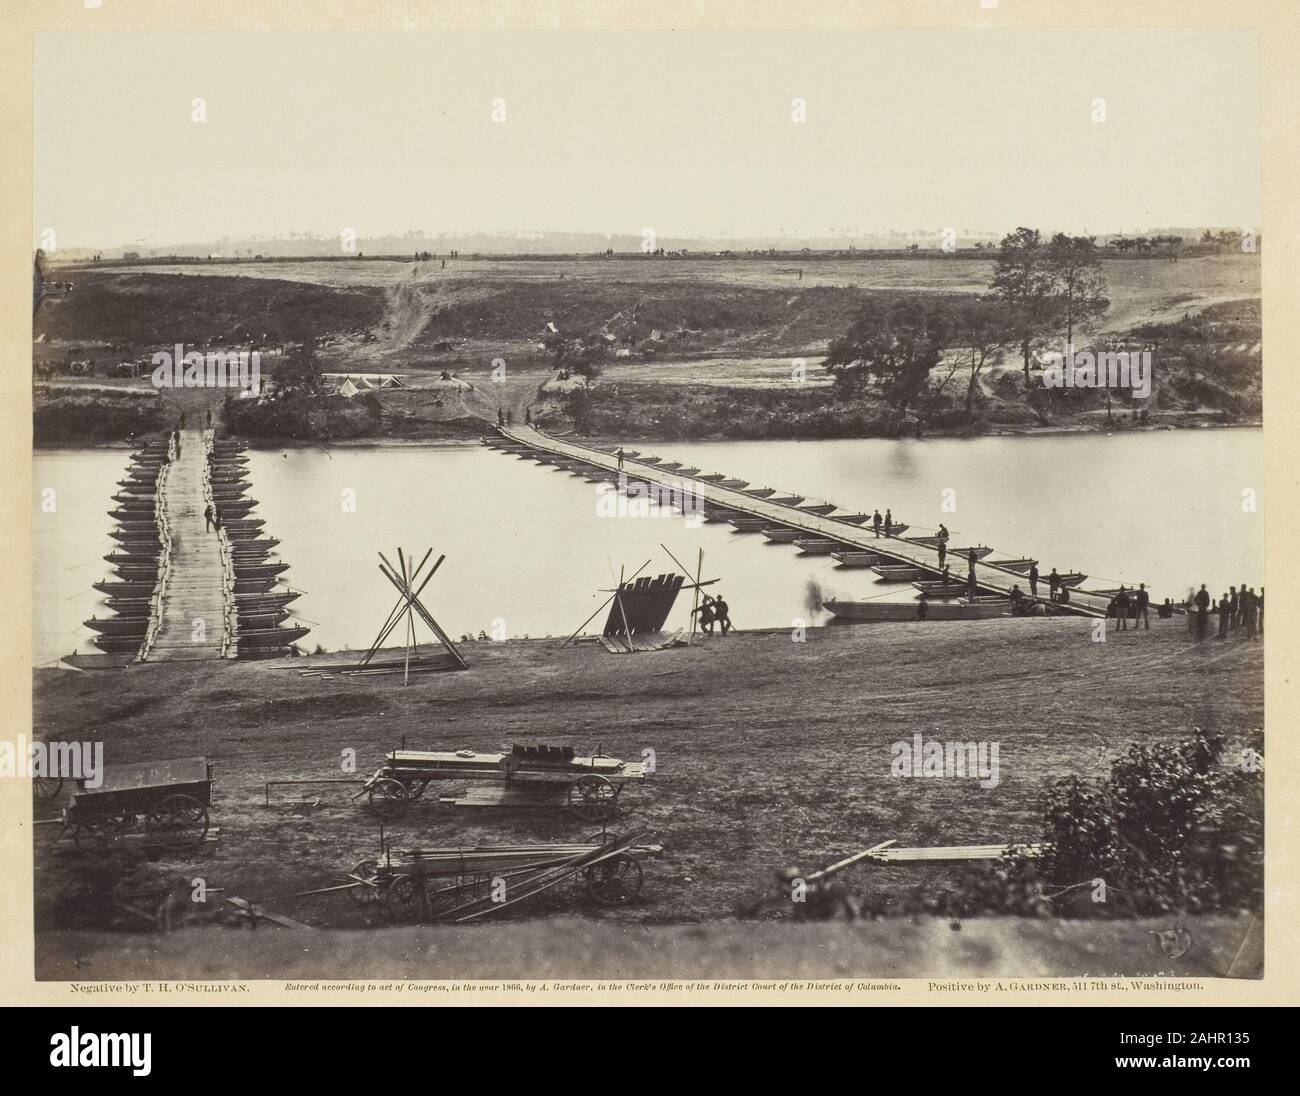 Timothy O'Sullivan. Pontoon Bridge Across the Rappahannock. 1863. United States. Albumen print, pl. 32 from the album Gardner's Photographic Sketch Book of the War, vol. 1 (1866) Stock Photo